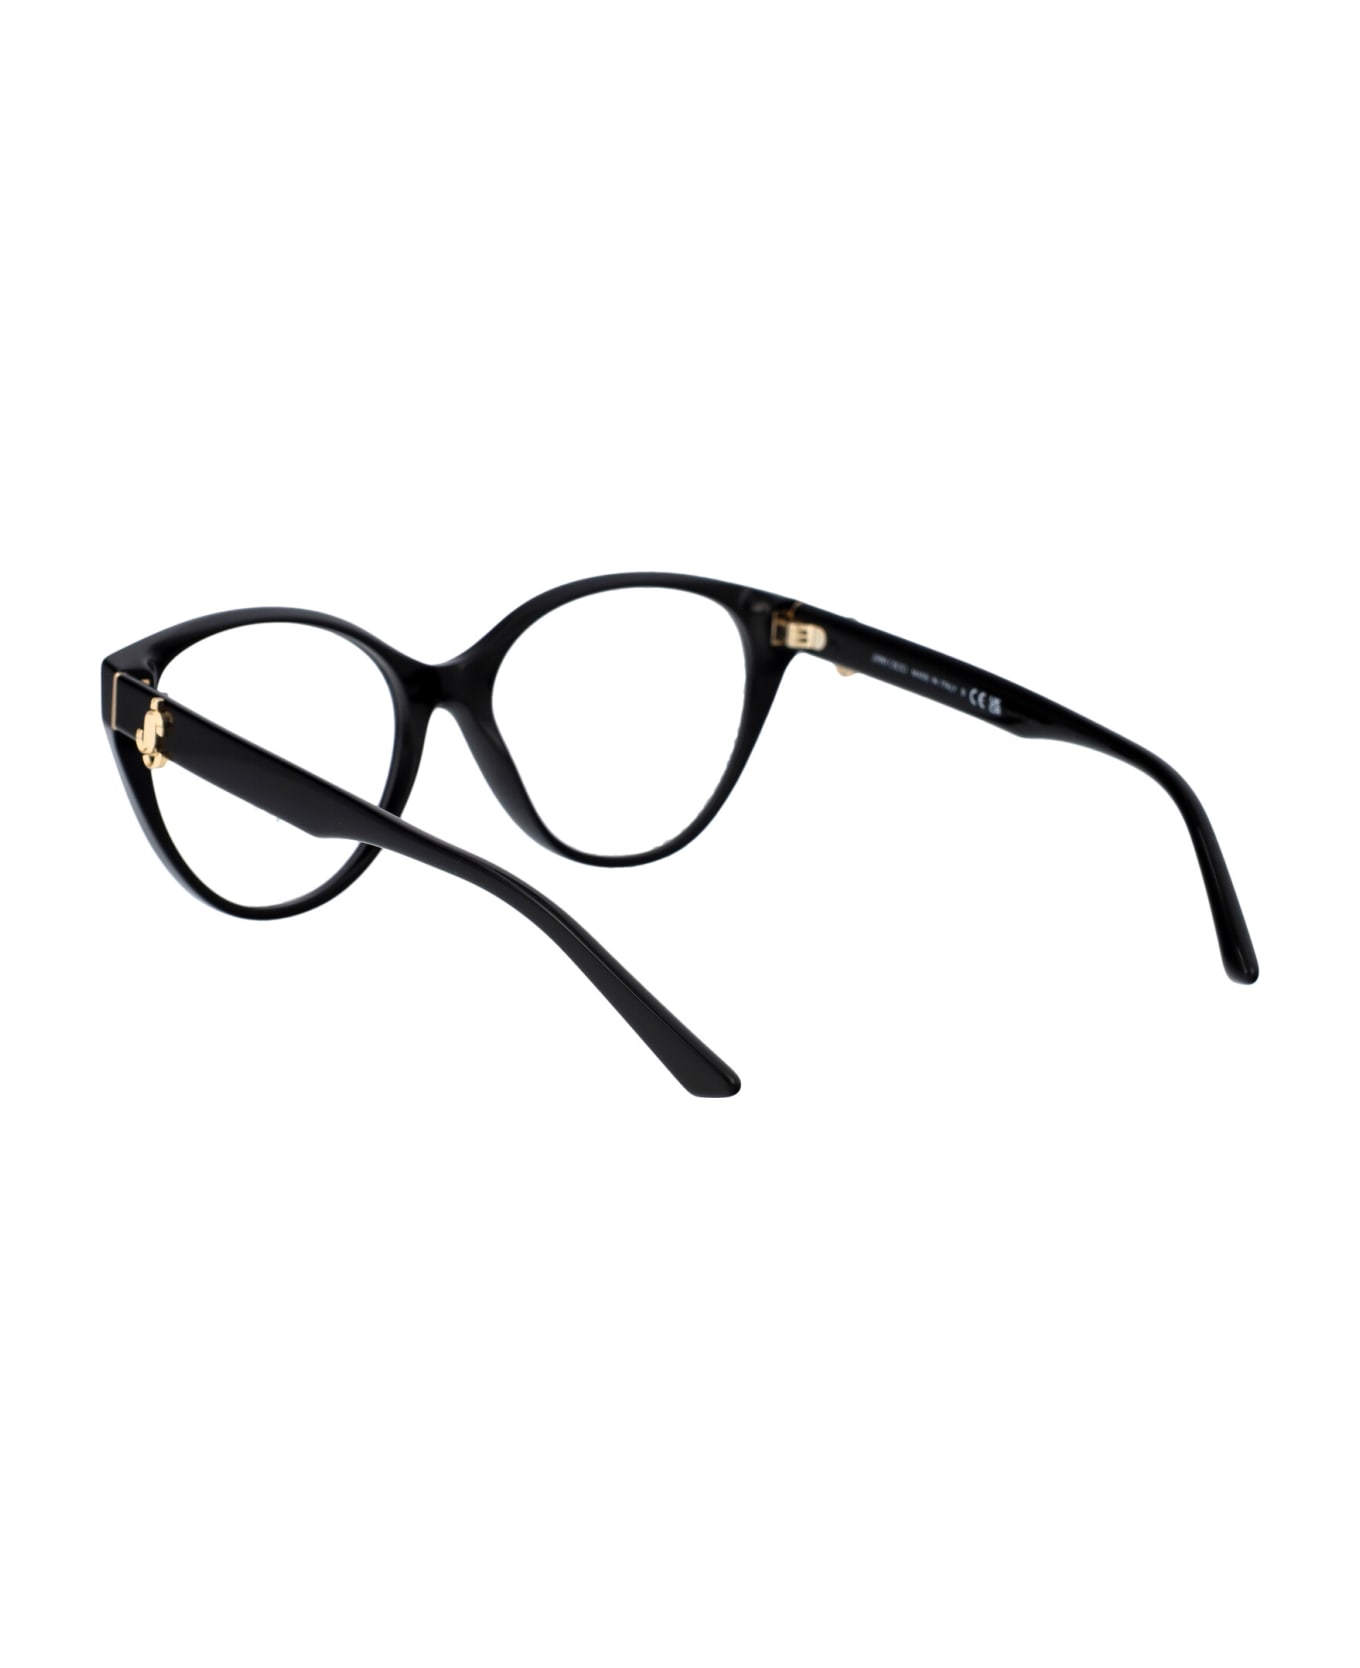 Jimmy Choo Eyewear 0jc3009 Glasses - 5000 Black